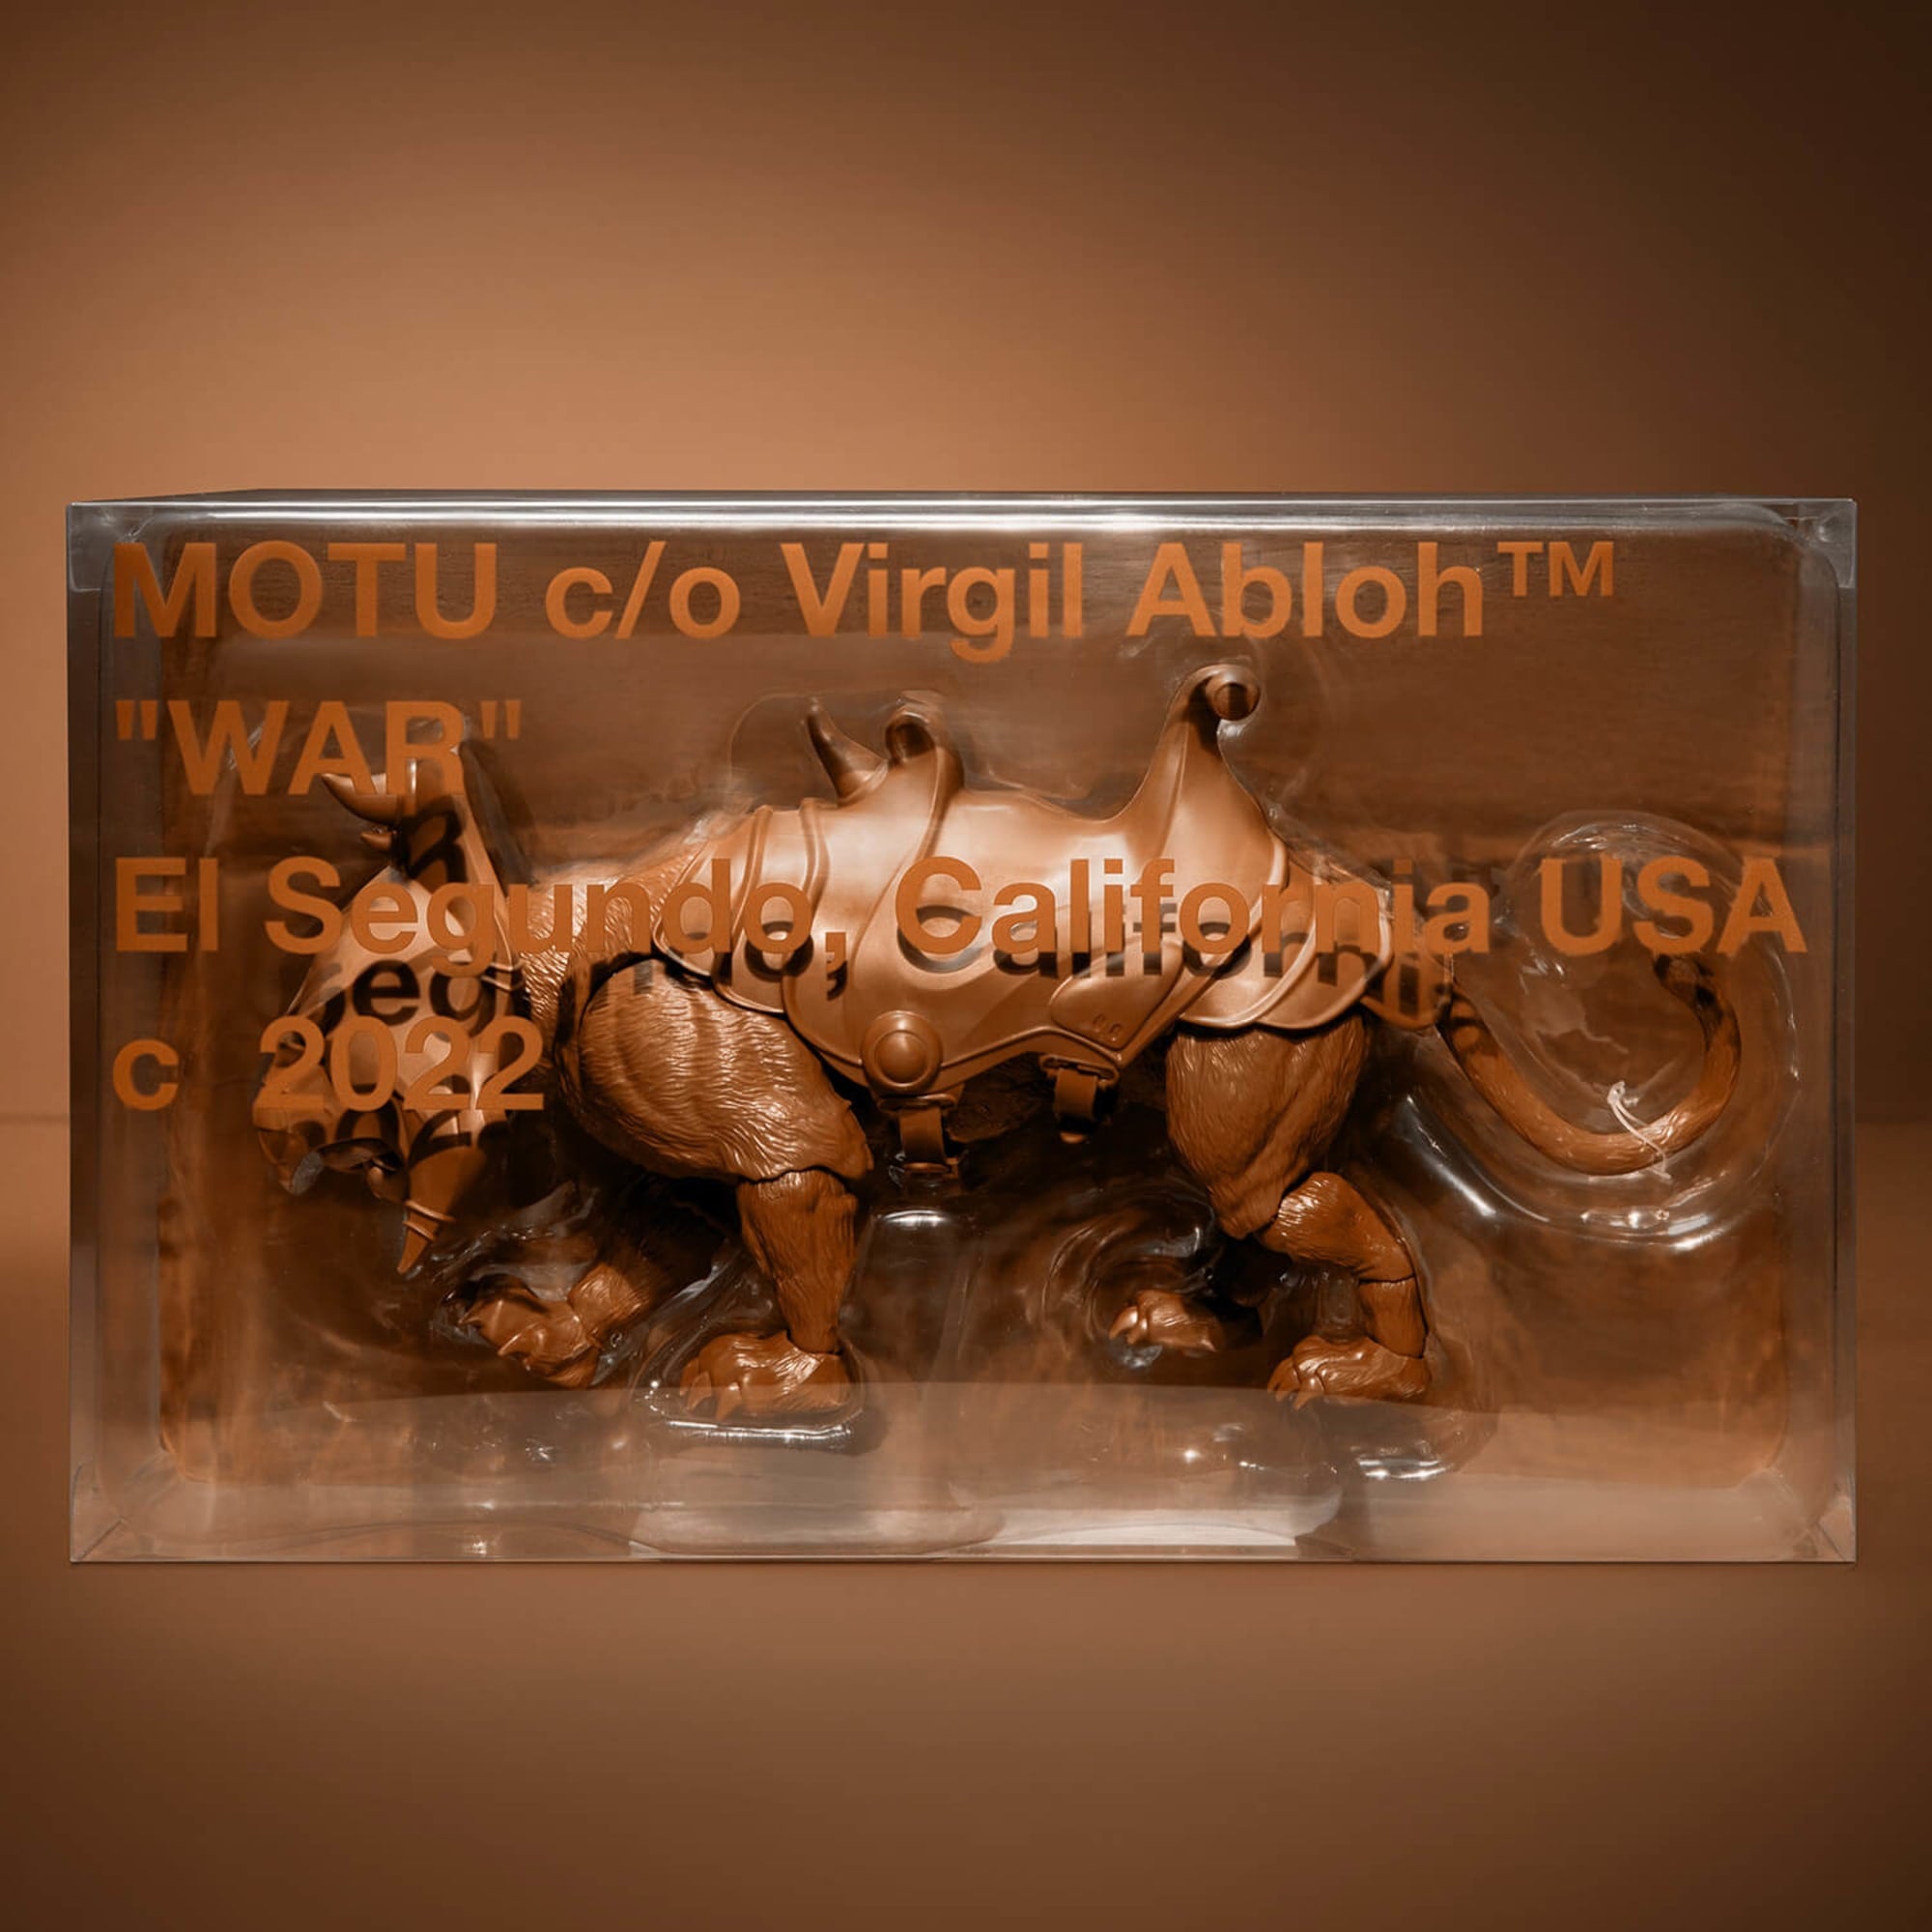 Virgil Abloh x MOTU Battle Cat Collector Figure